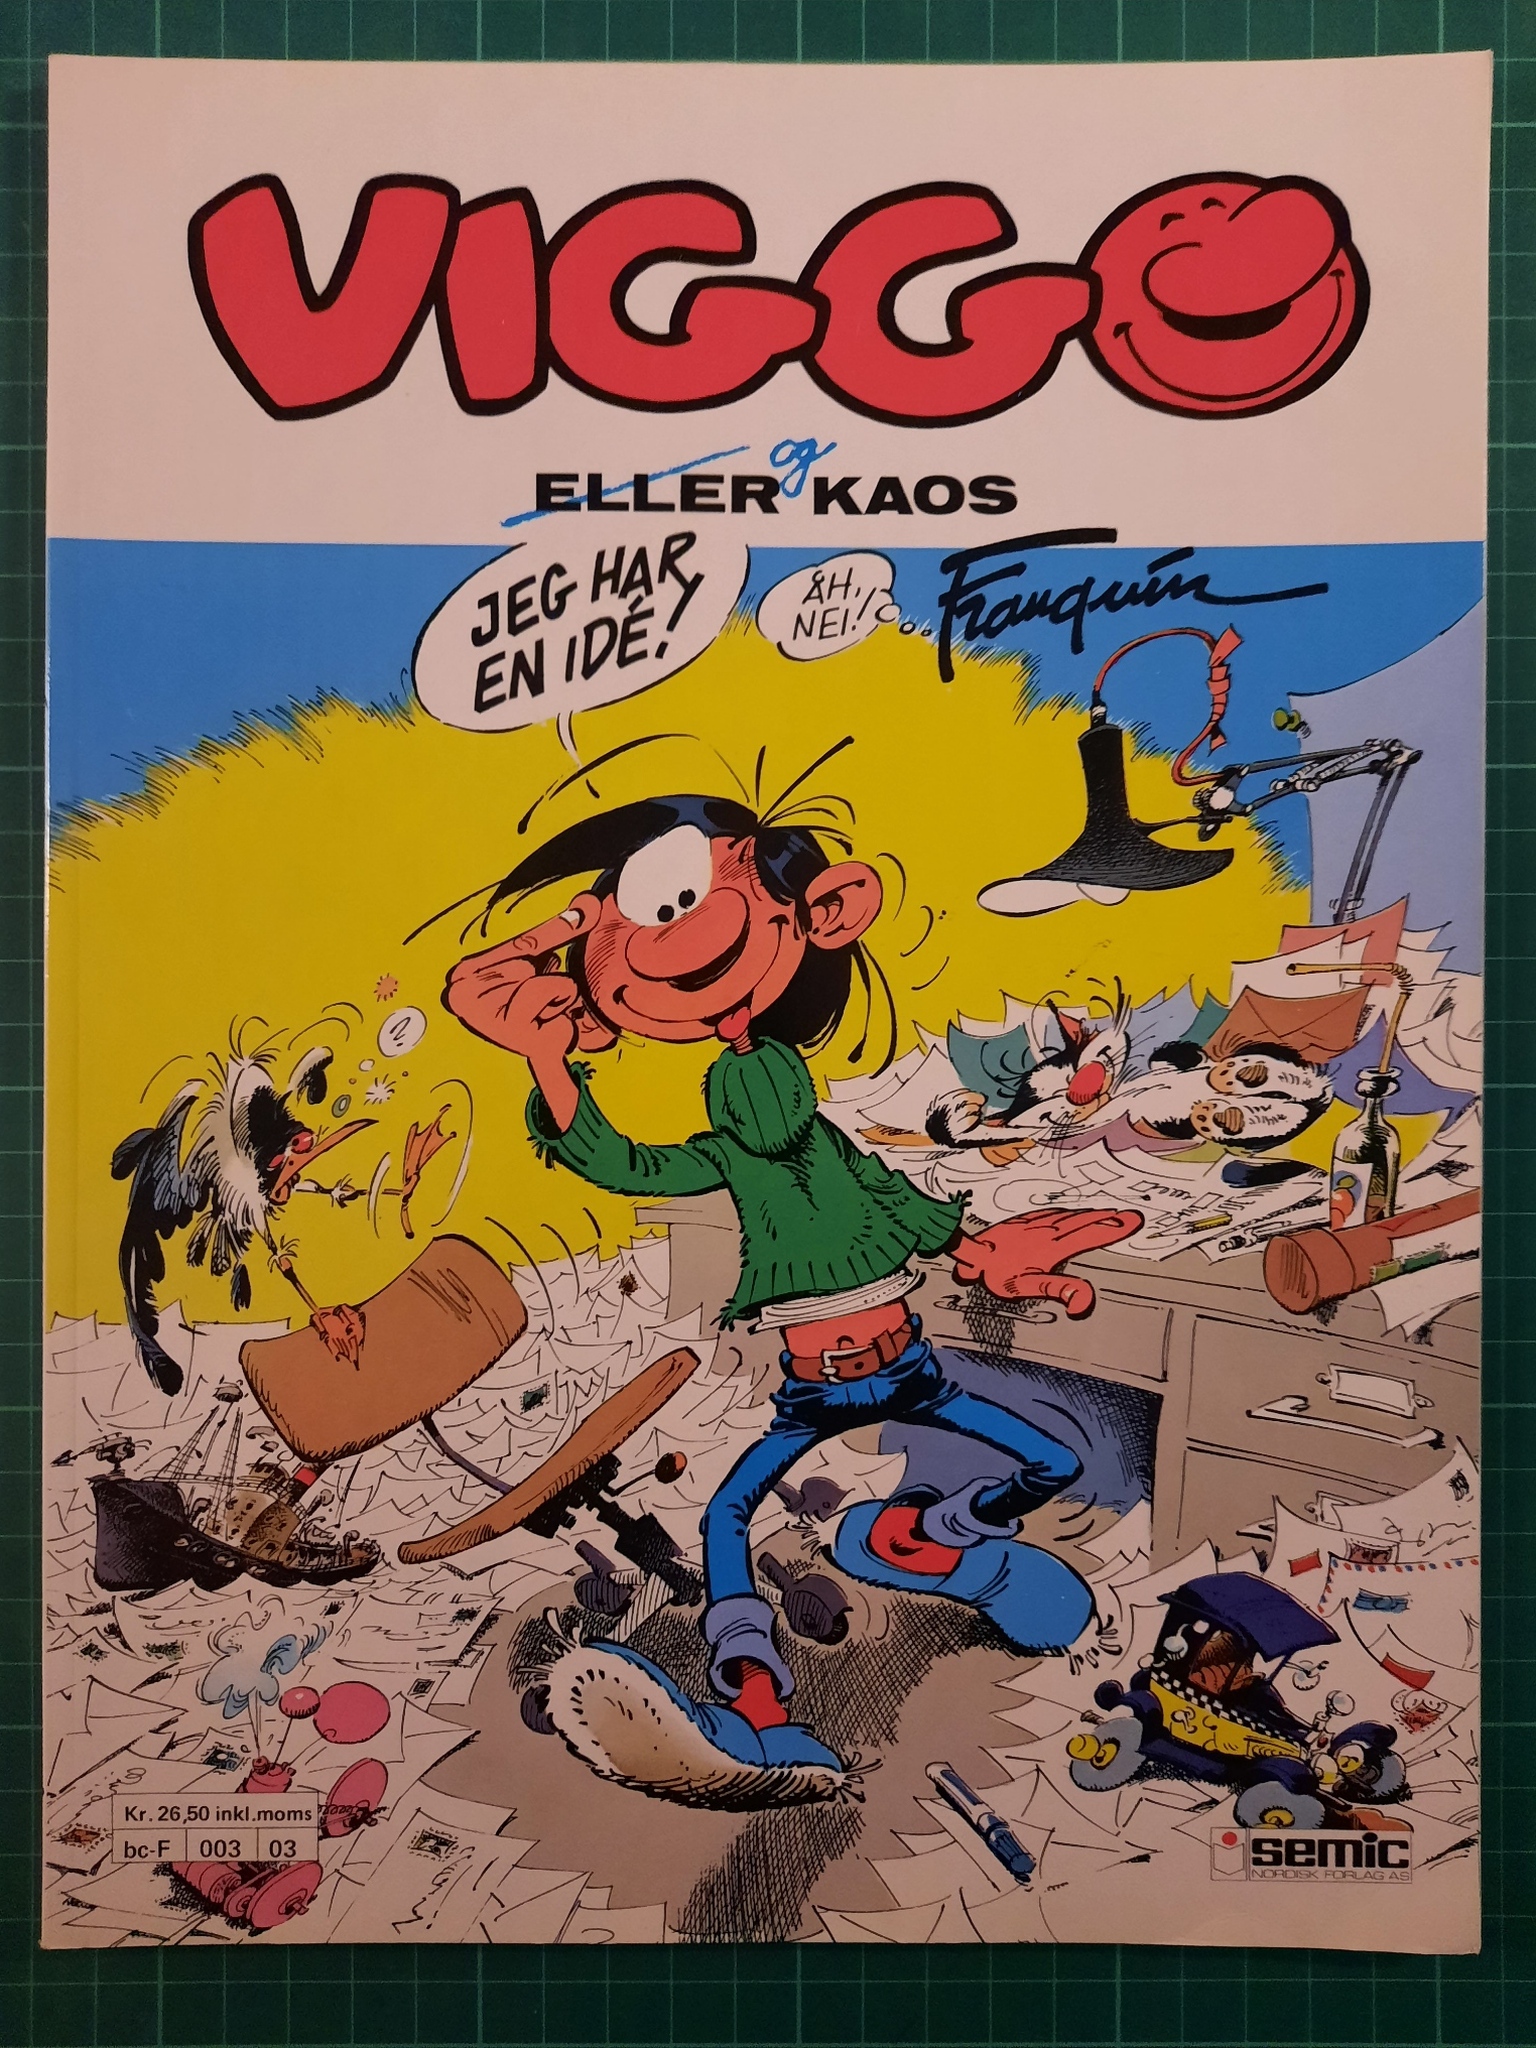 Viggo 12 : Viggo (eller) og kaos